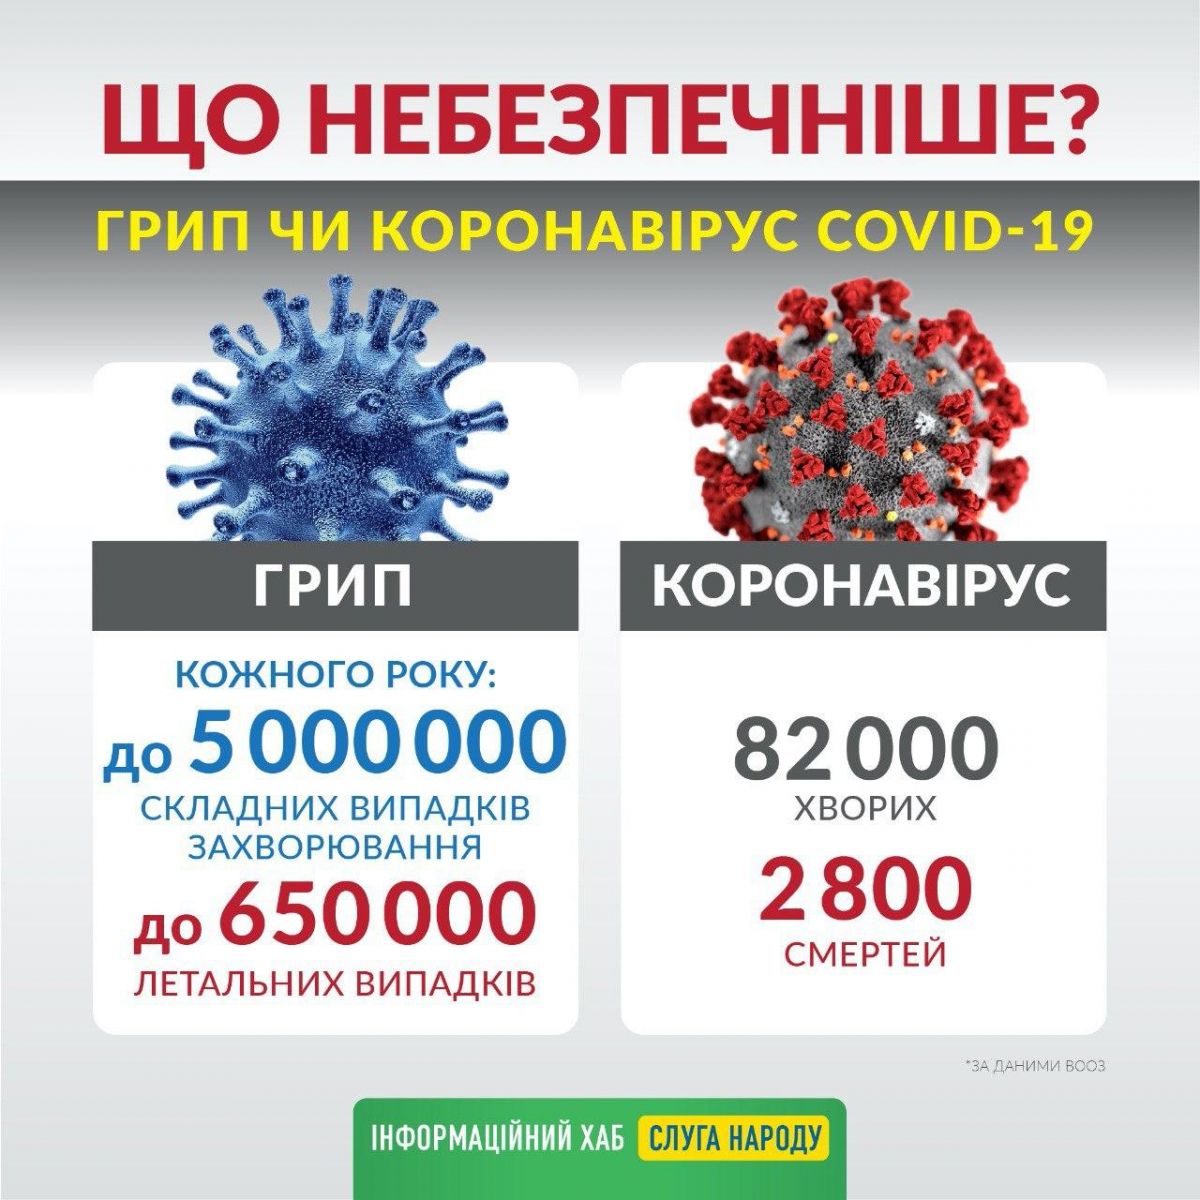 В «Слуге народа» сравнили грипп с коронавирусом. Инфографика: Слуга народа